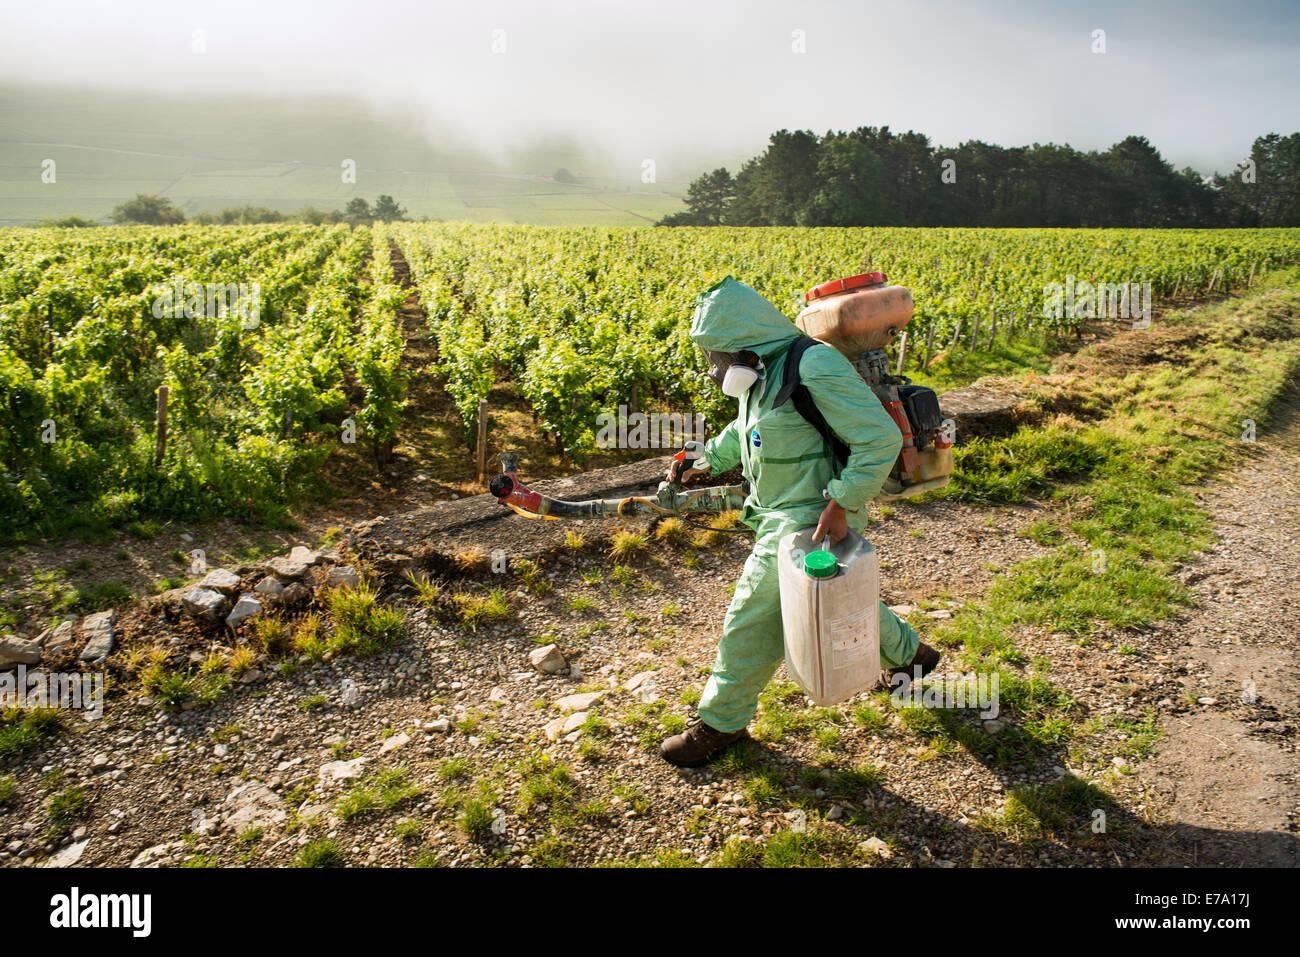 Man walking in vineyard spraying chemicals on vines, Pommard, Burgundy, France Stock Photo